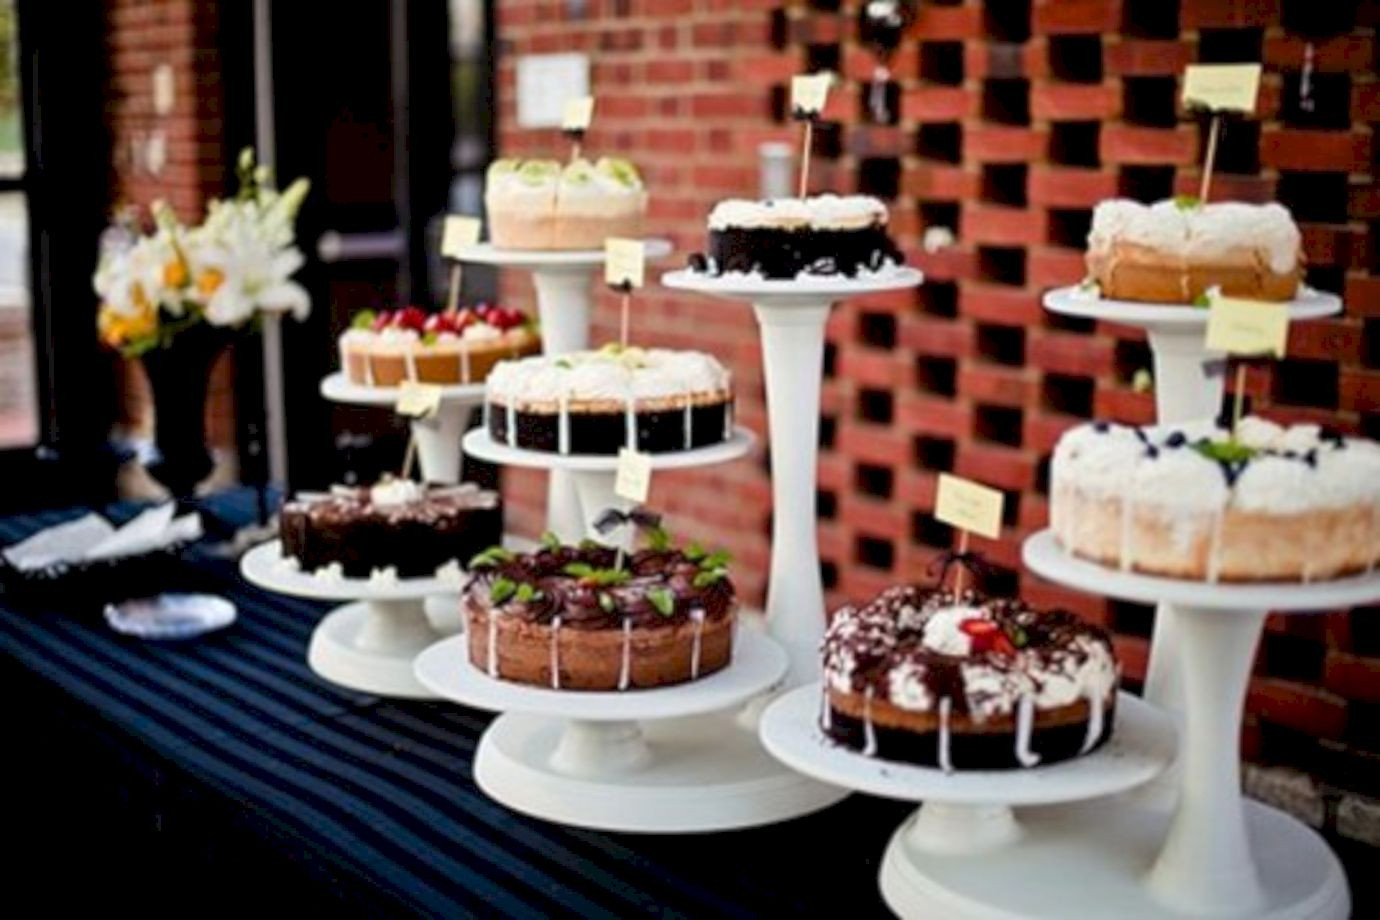 Cheesecake Factory Wedding Cakes the Best Ideas for 18 Cute Cheesecake Wedding Cake with Unfor Table Taste